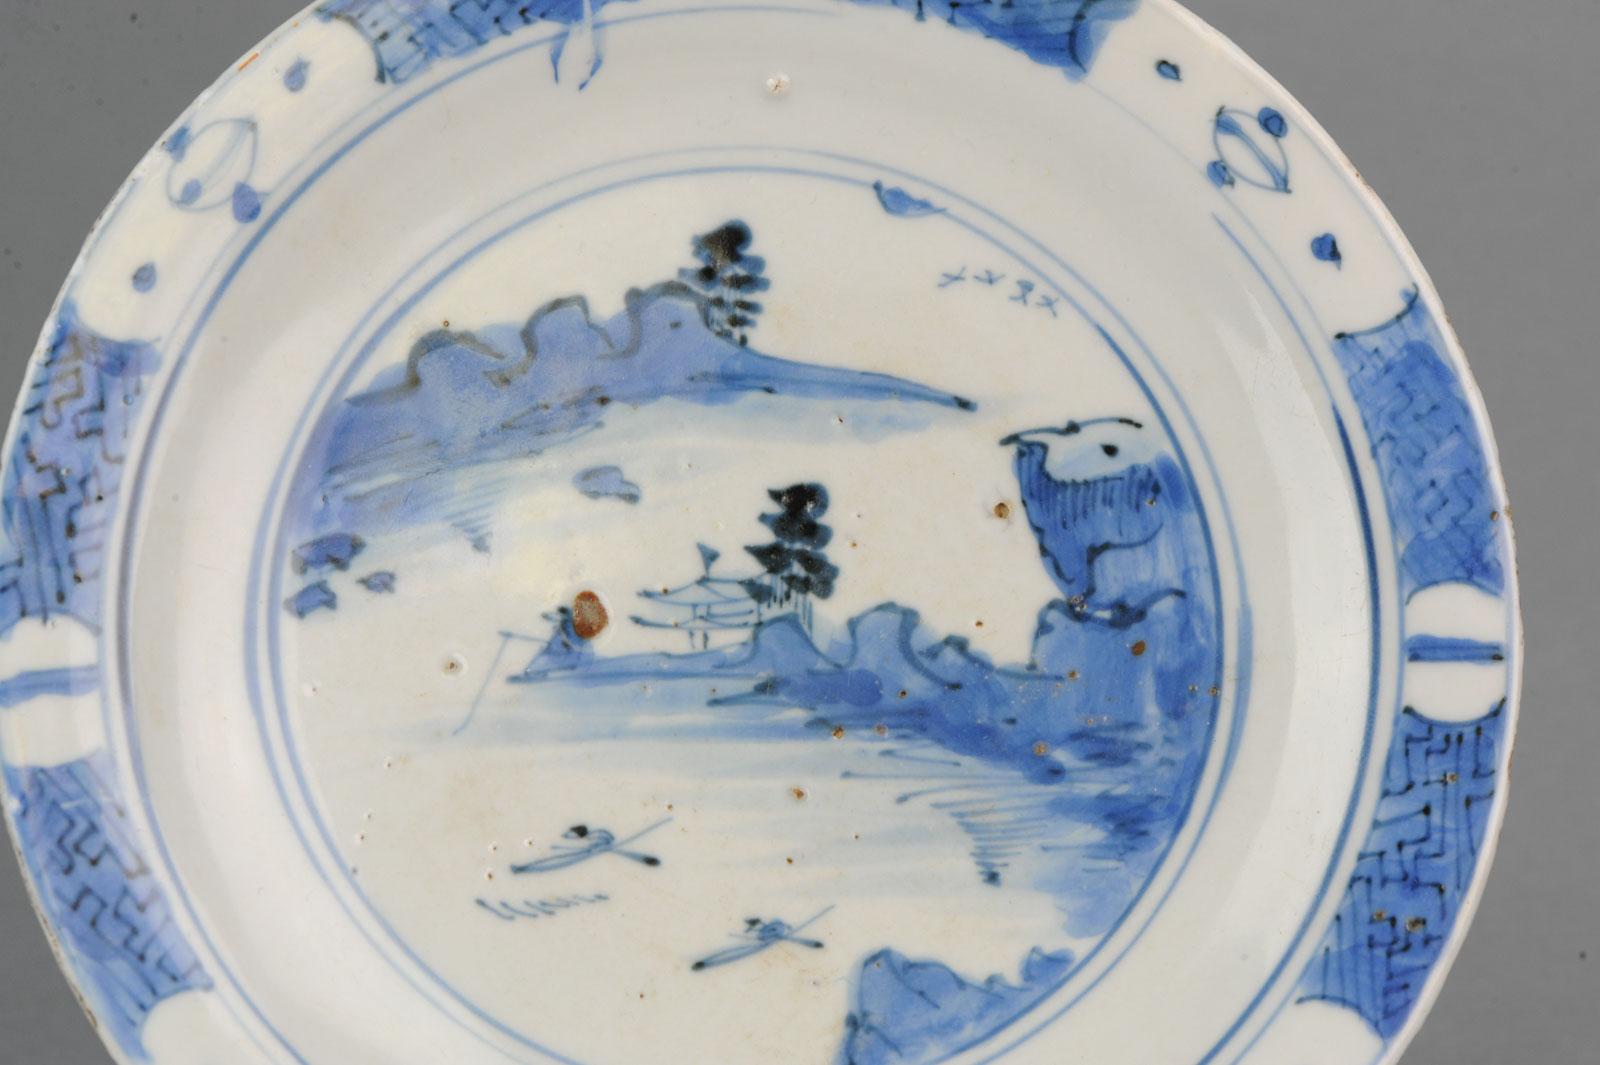 Edo Antique Japanese Shoki Imari Plate circa 1620-1630 Arita Japan Porcelain For Sale